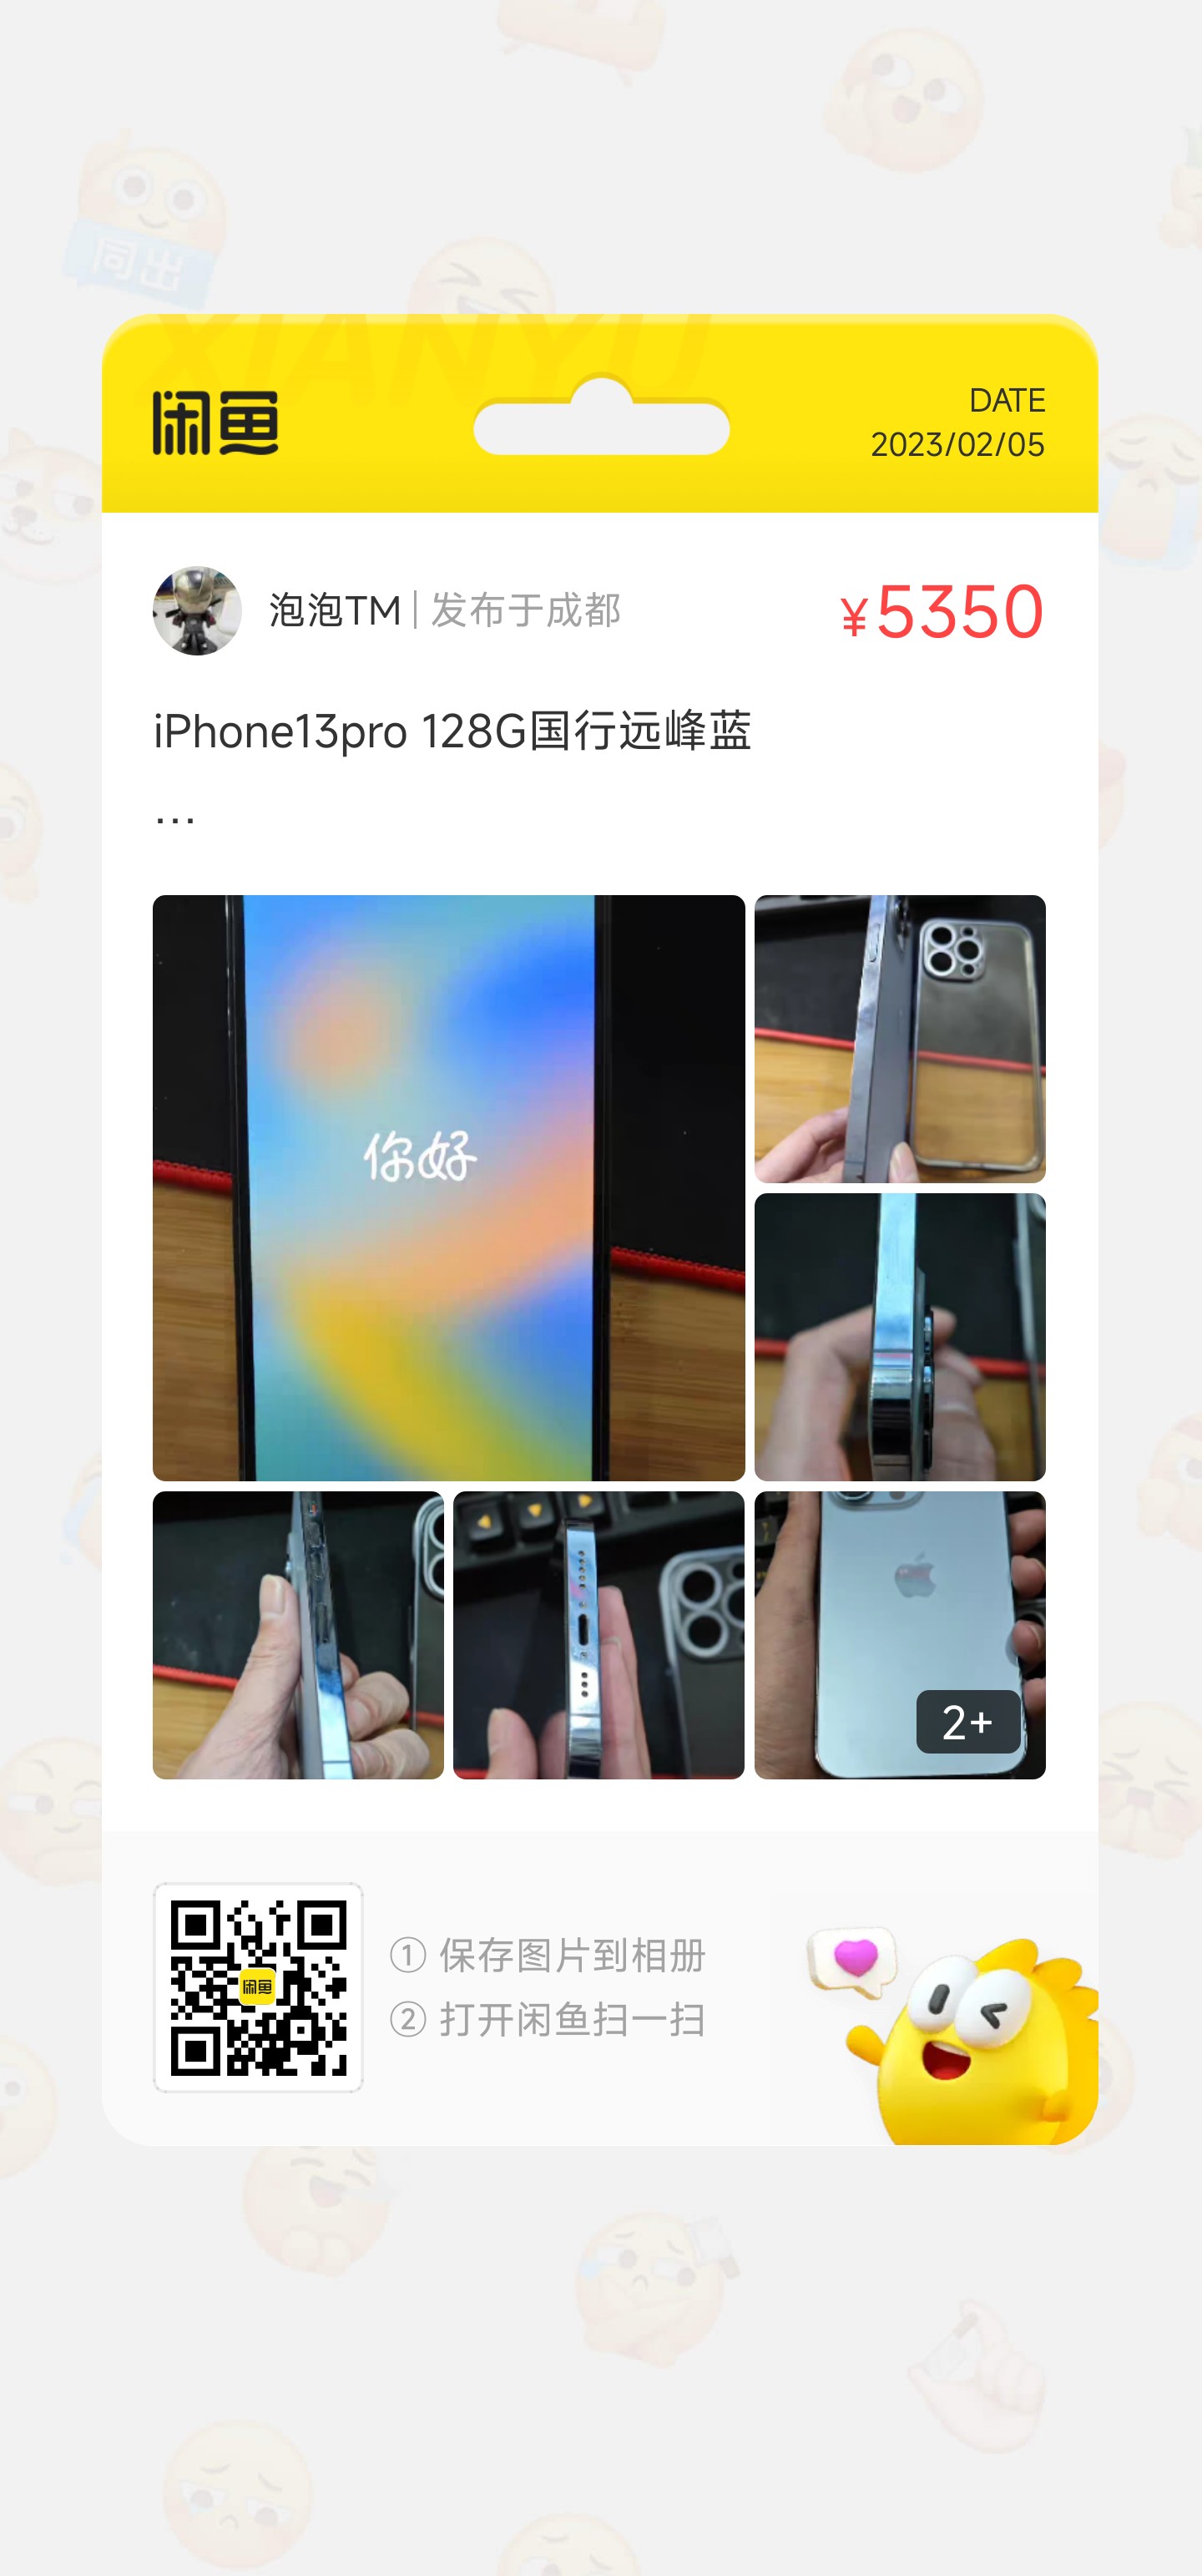 Apple - iPhone13pro 128Gシルバー 専用の+spbgp44.ru